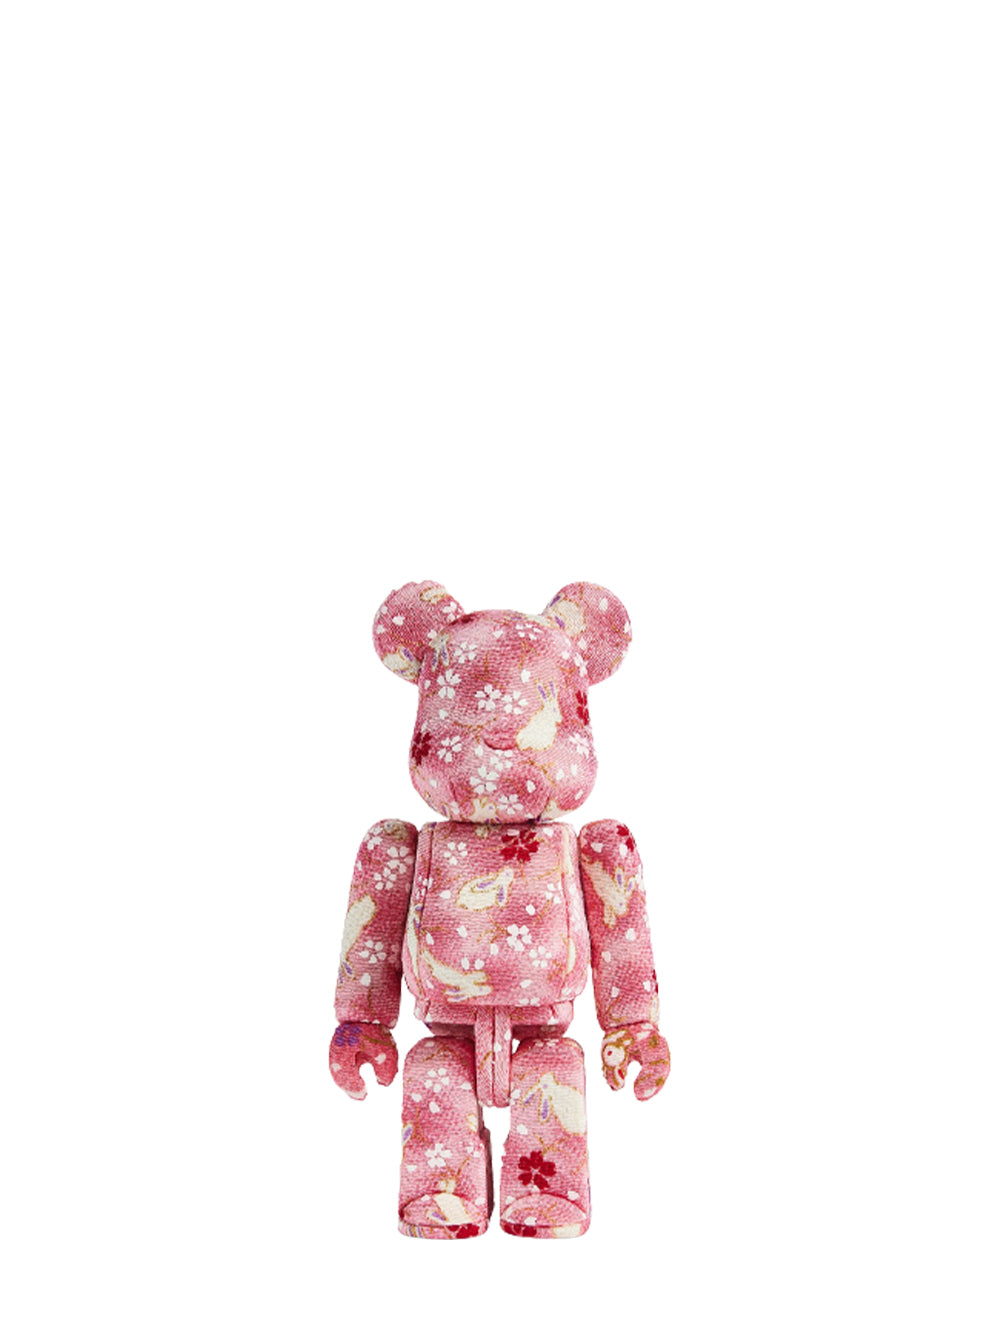 BEARBRICK-Kimekomi-Rabbits-On-Cherry-Blossoms-200-Pink-1